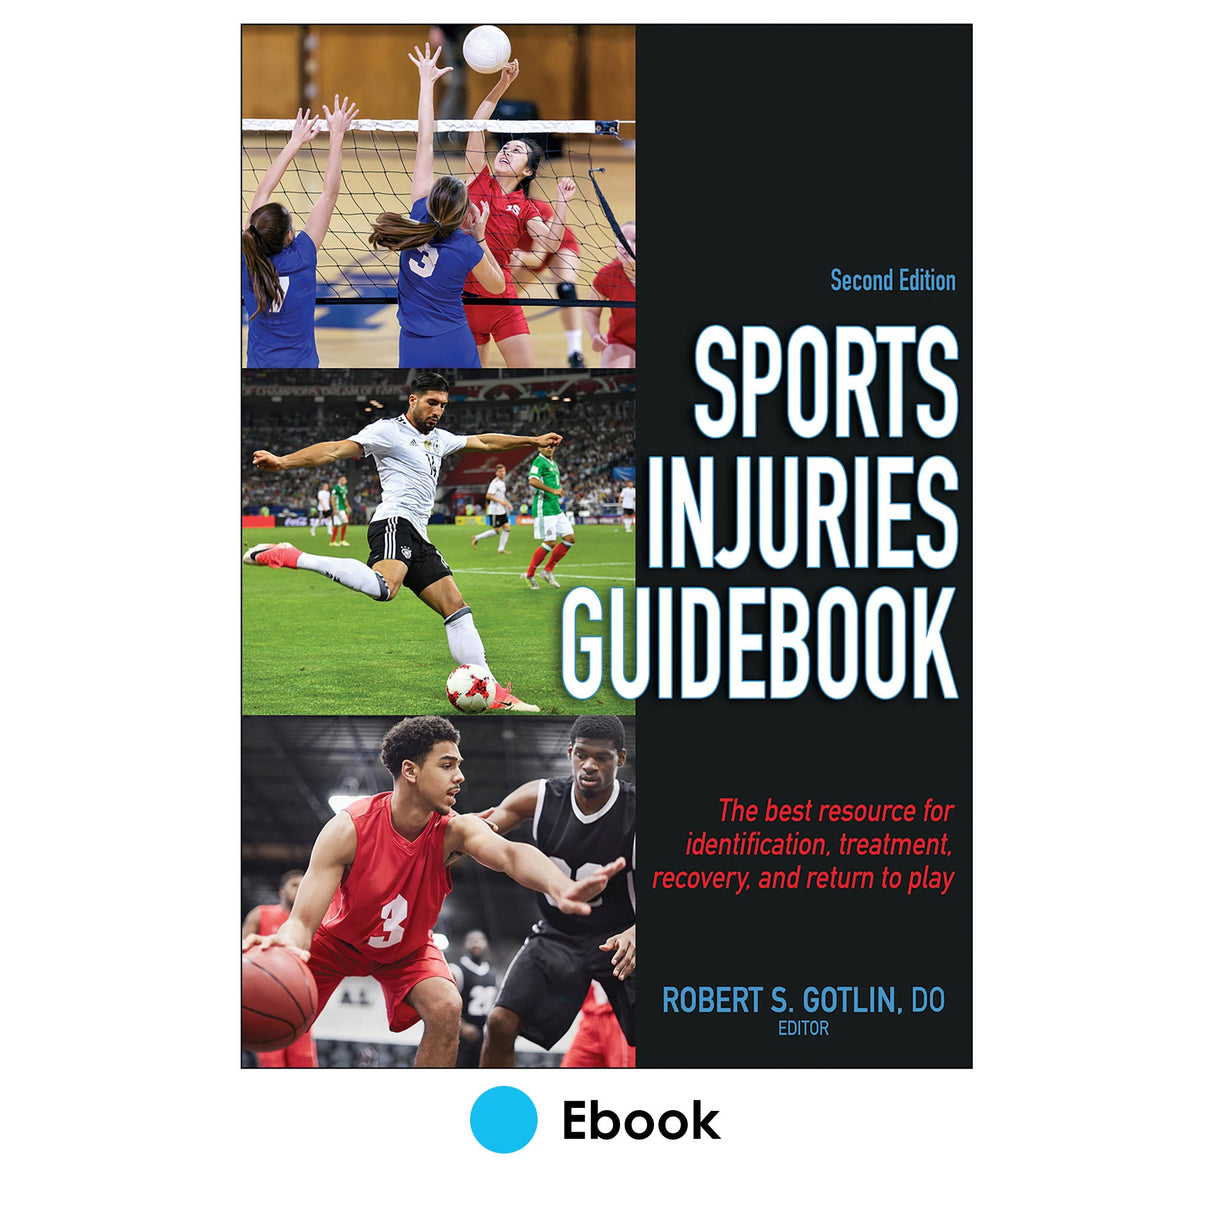 Sports Injuries Guidebook 2nd Edition epub